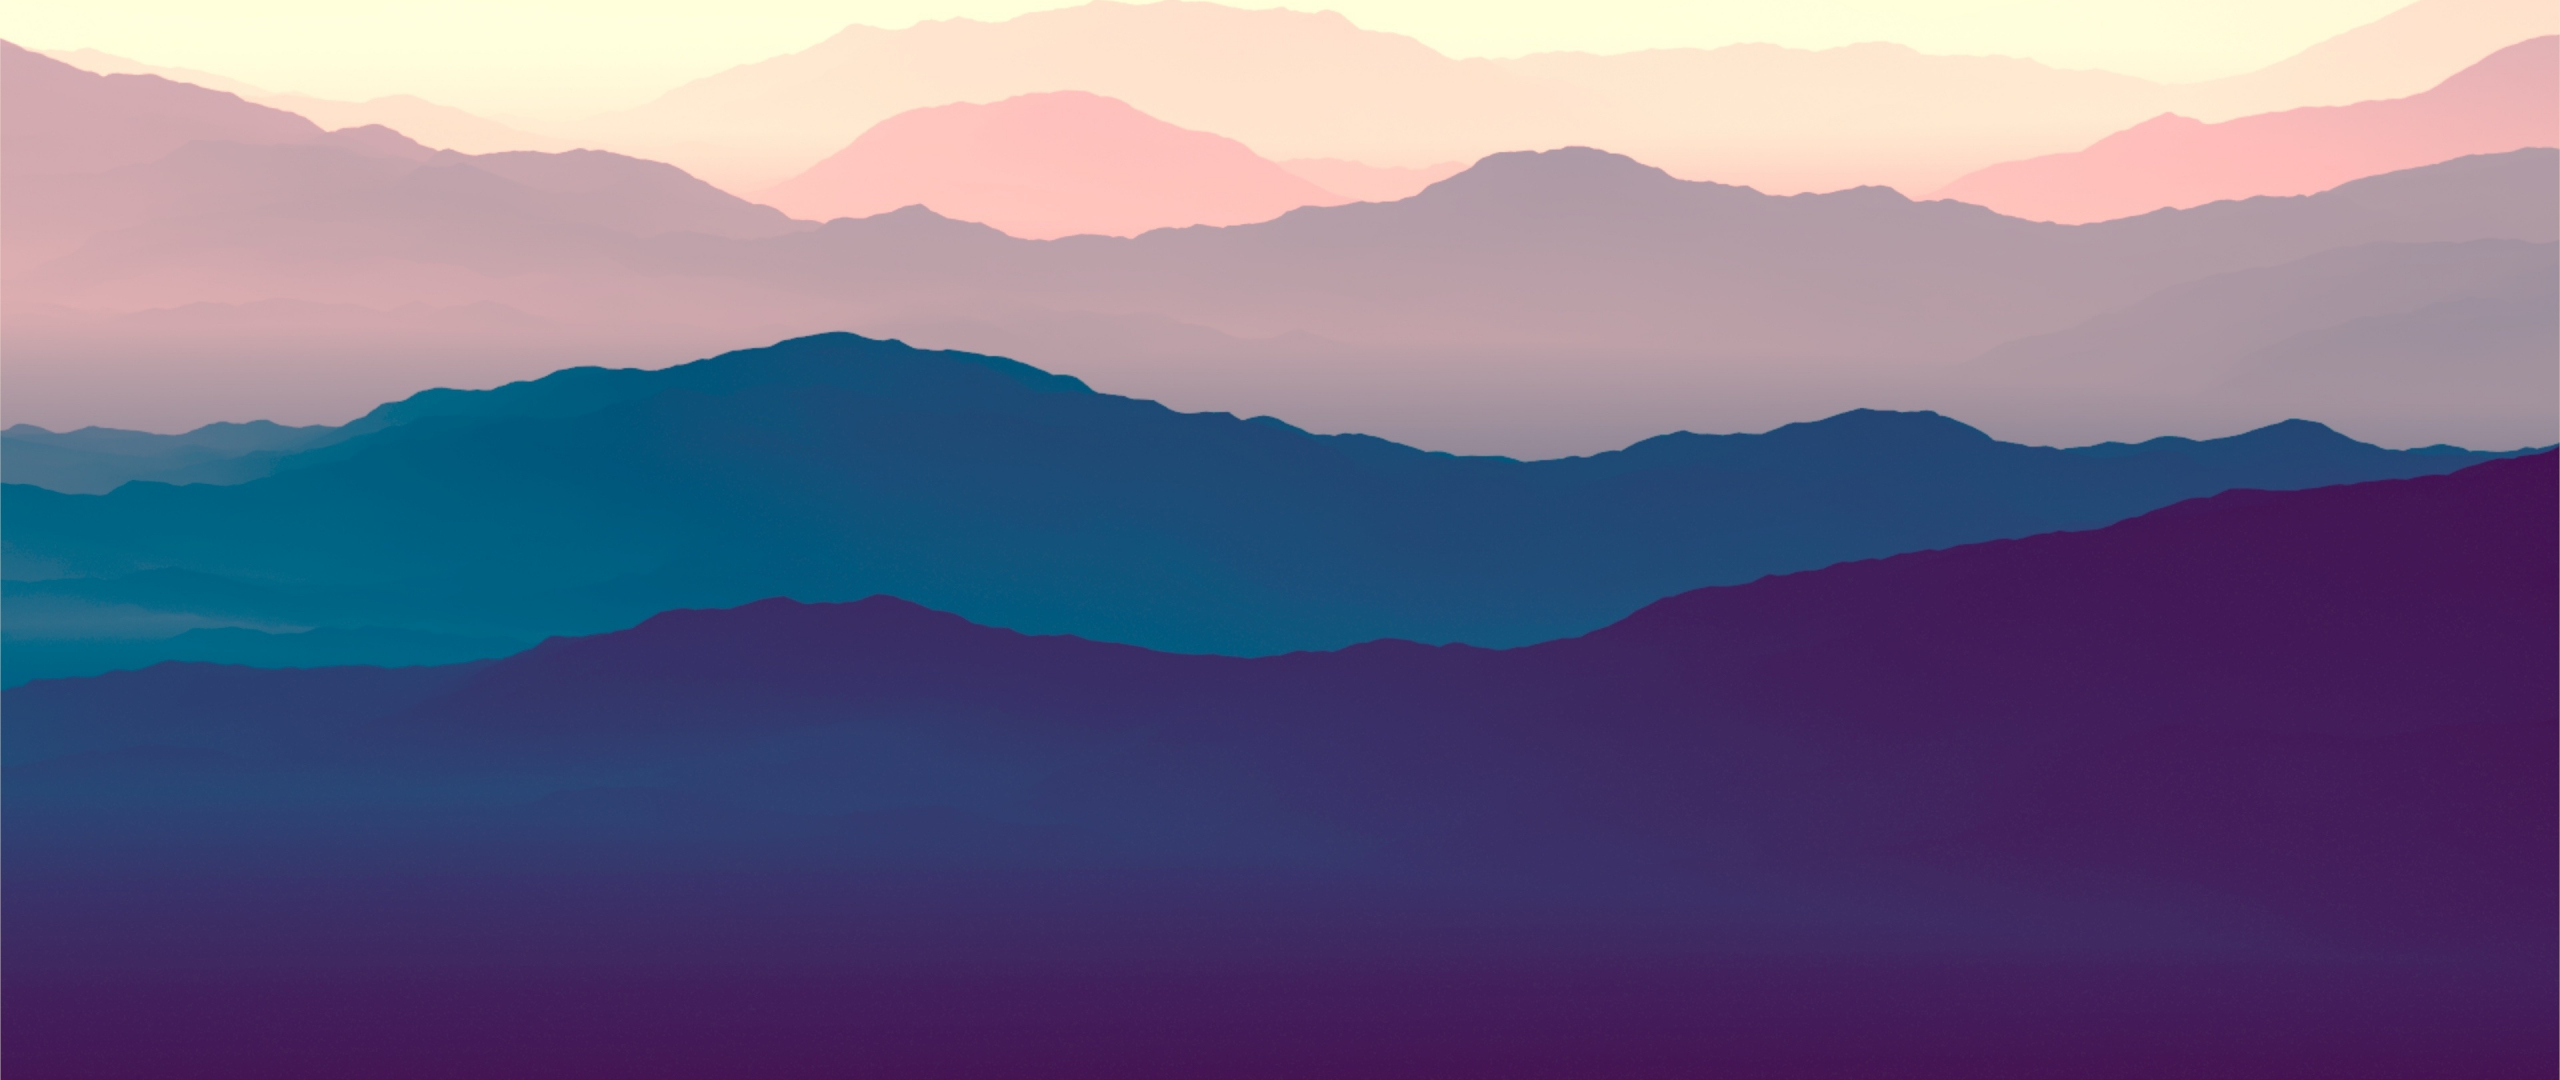 Download 2560x1080 Wallpaper Mountains Landscape Purple Sunset